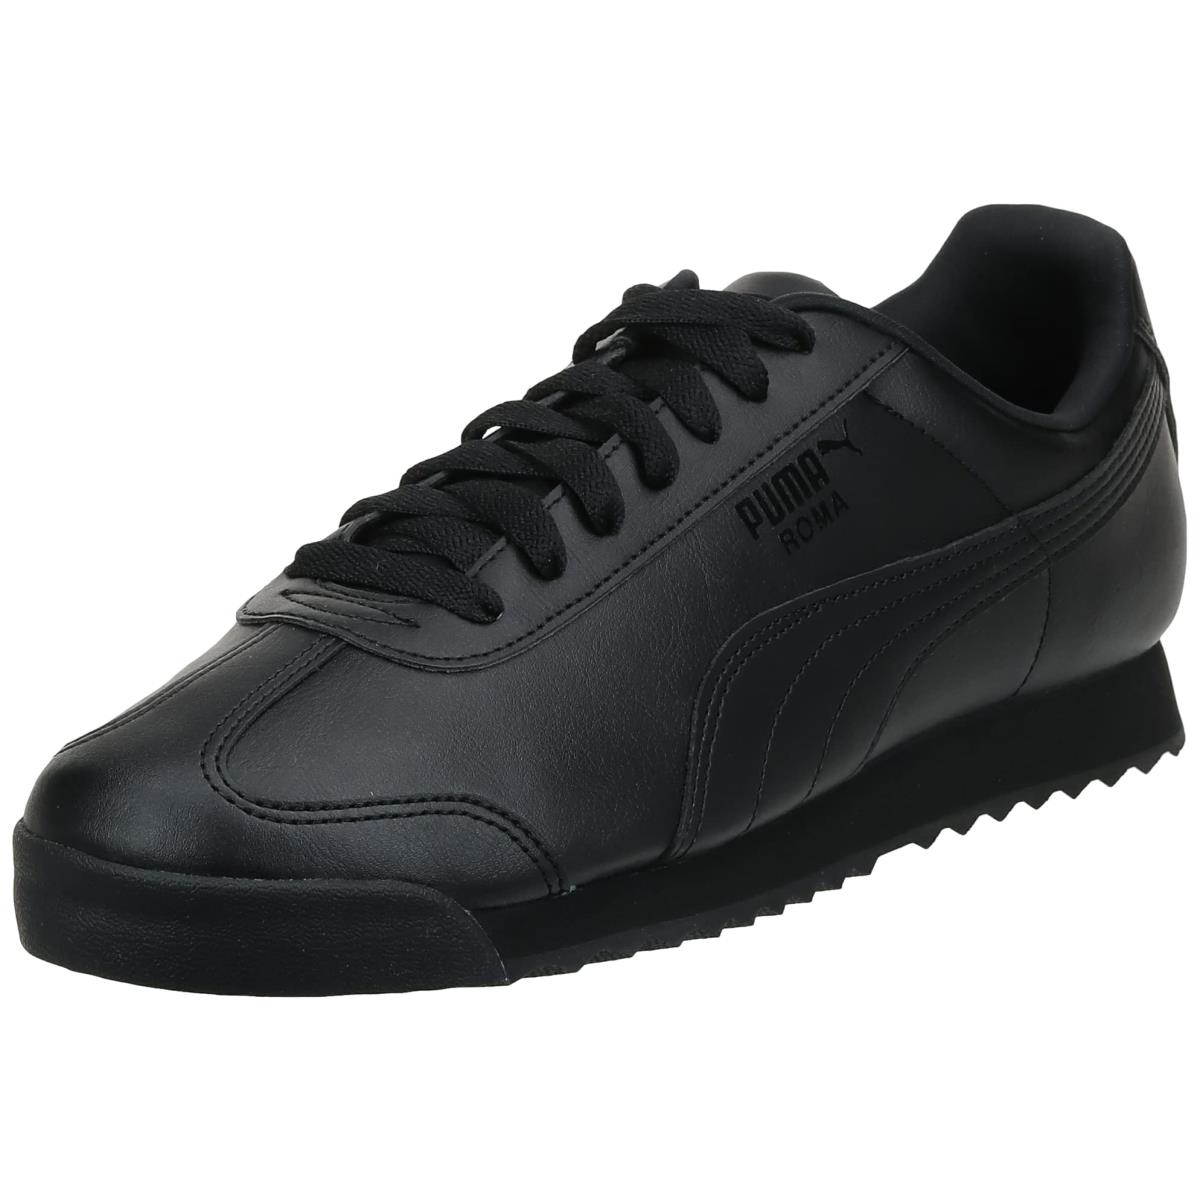 Puma Mens Roma Basic Sneakers Shoes Casual - Black Black/Black